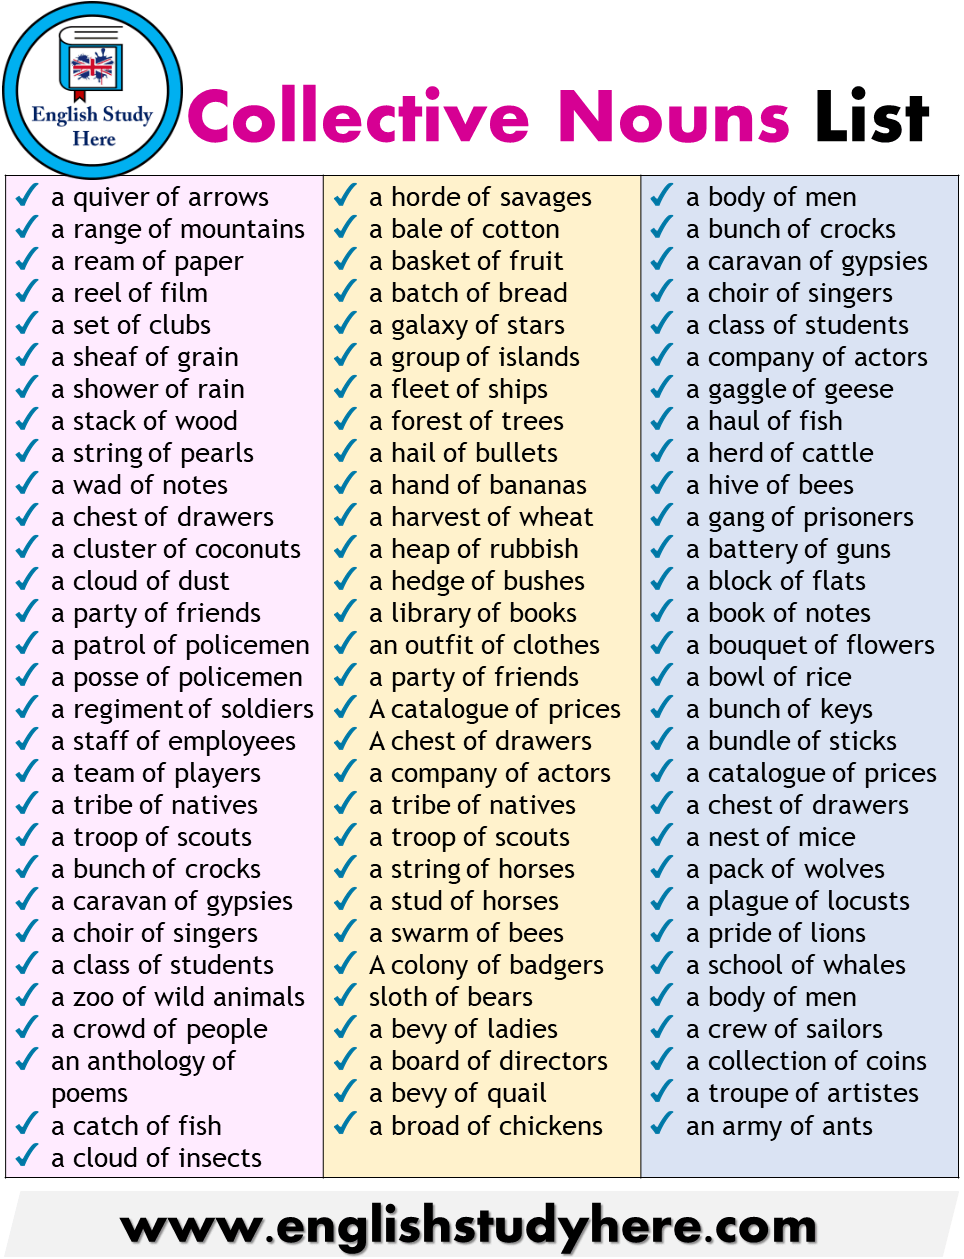 Collective Nouns List - English Study Here